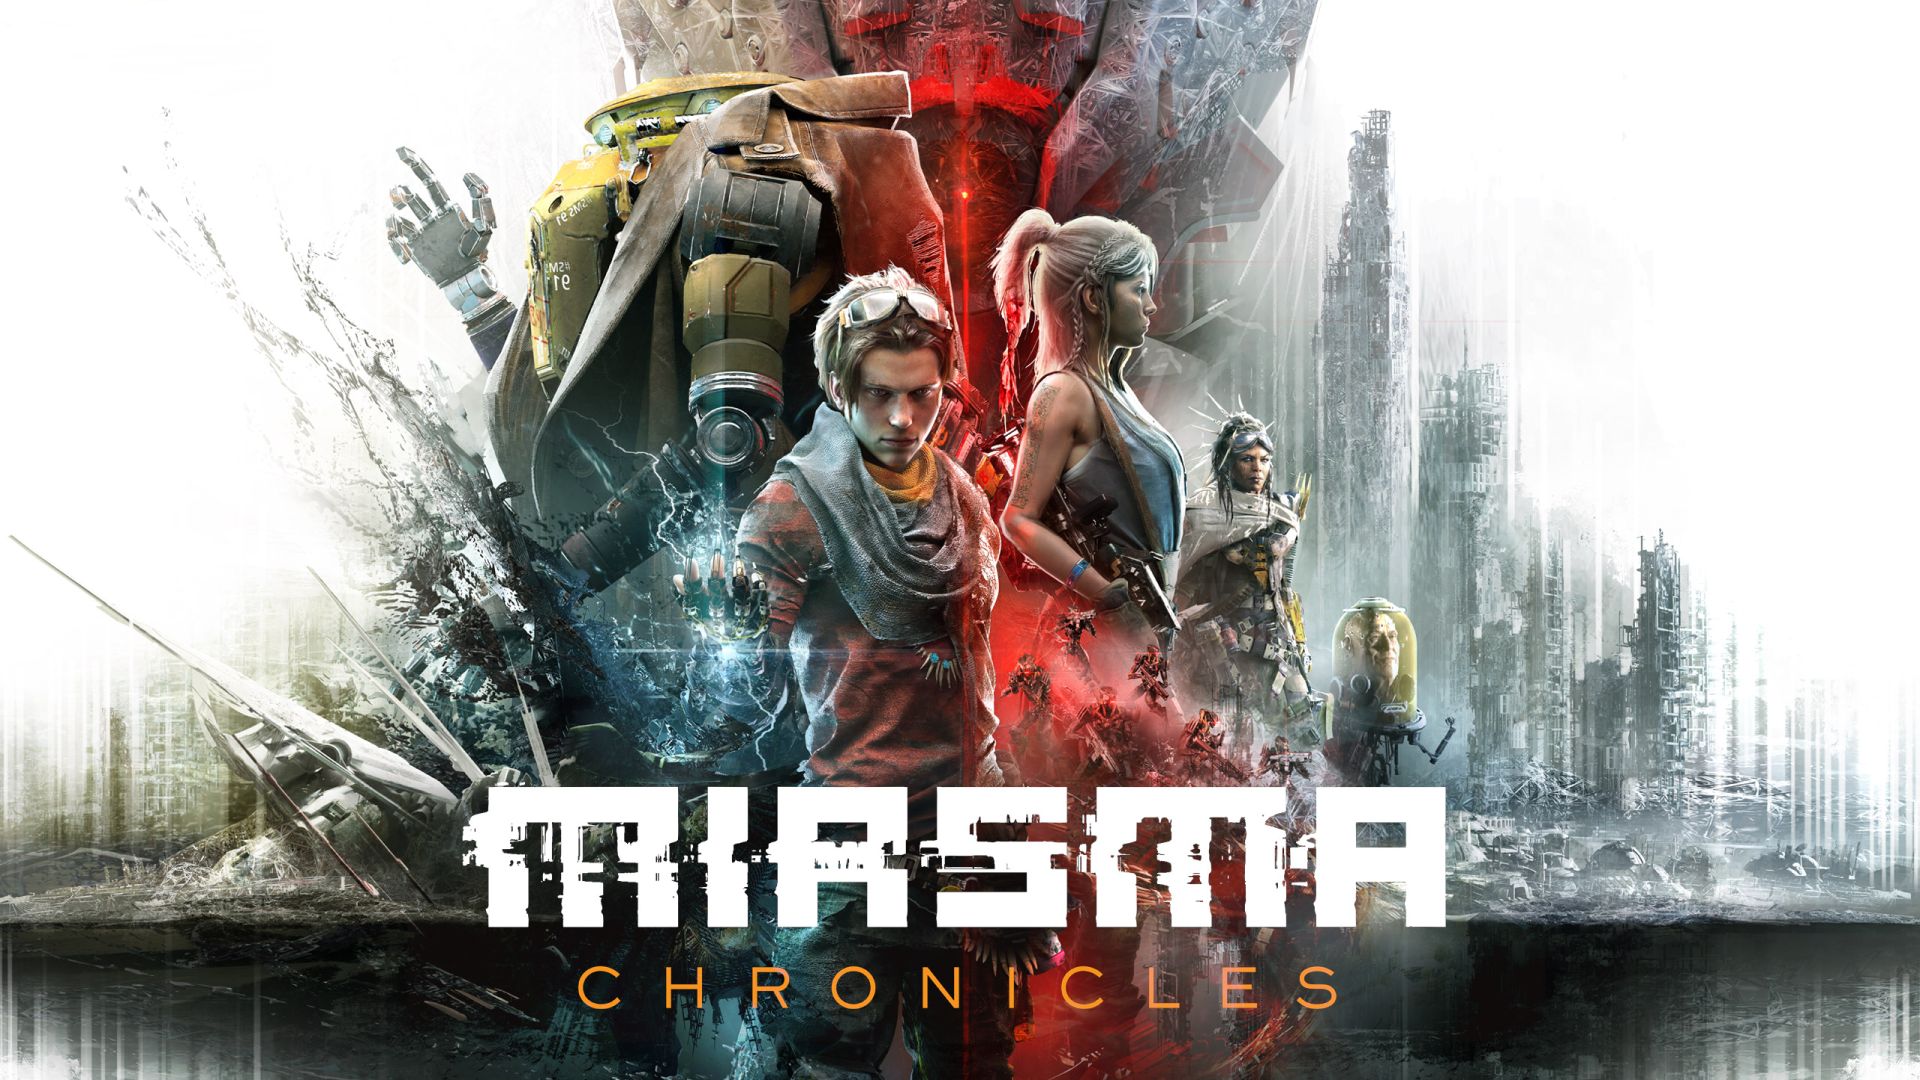 Video: Miasma Chronicles launch trailer